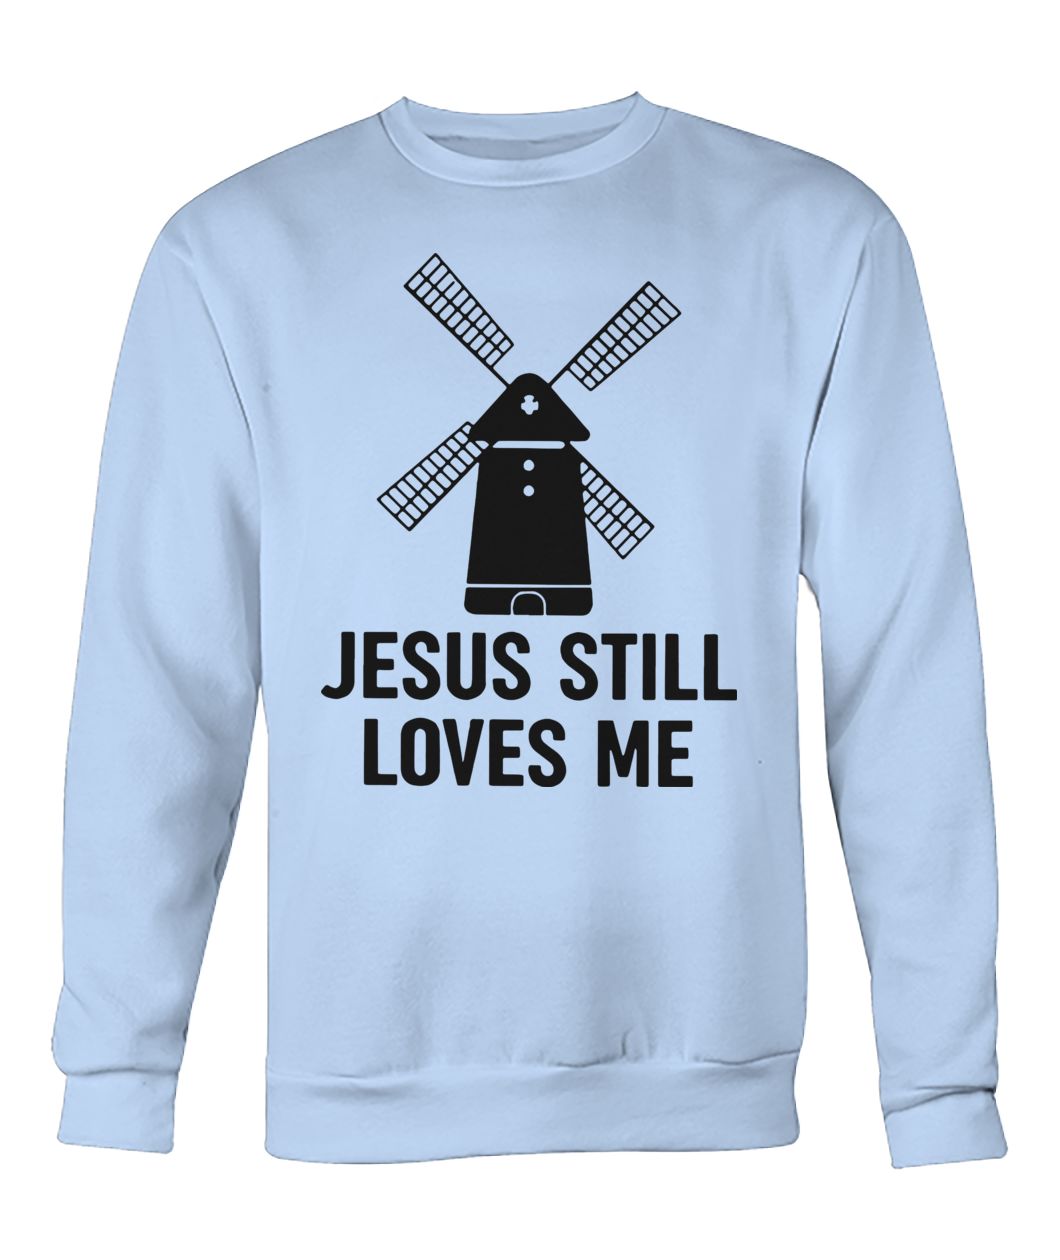 Jesus still loves me windmill crew neck sweatshirt